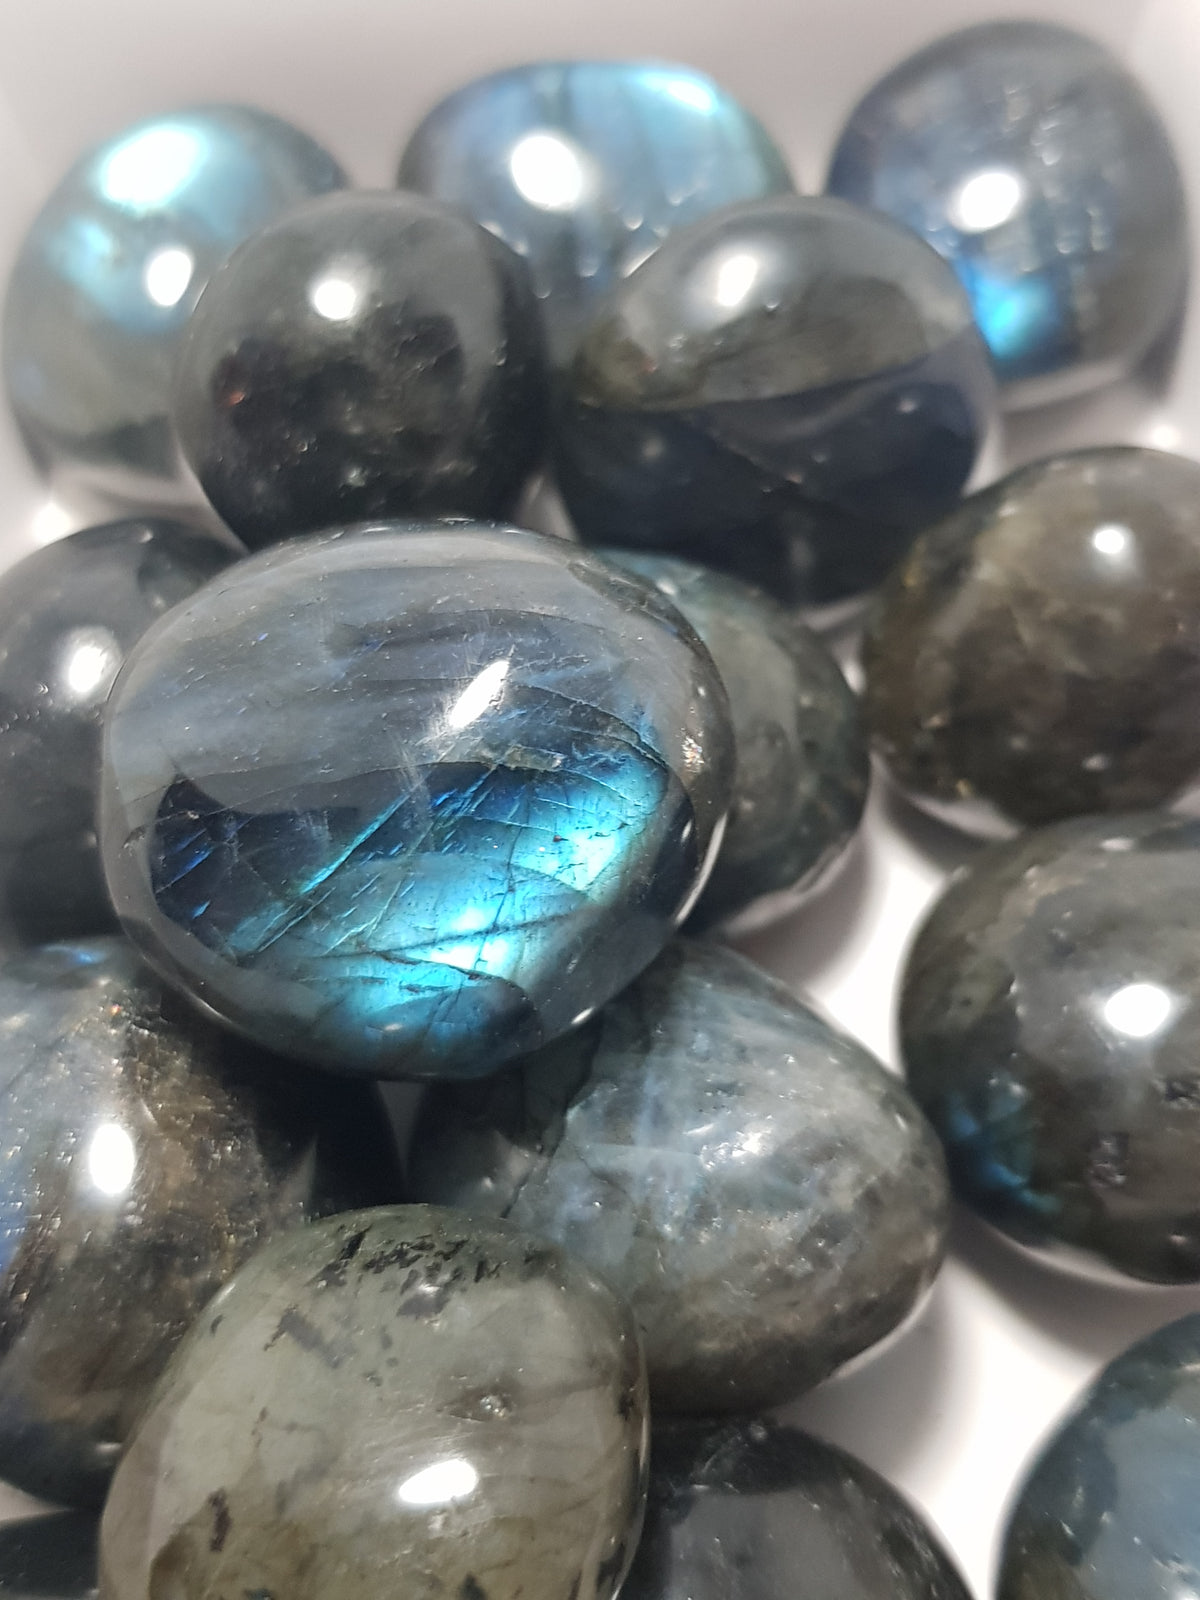 a small cluster of labradorite pebbles, which show bright blue labradorescence.